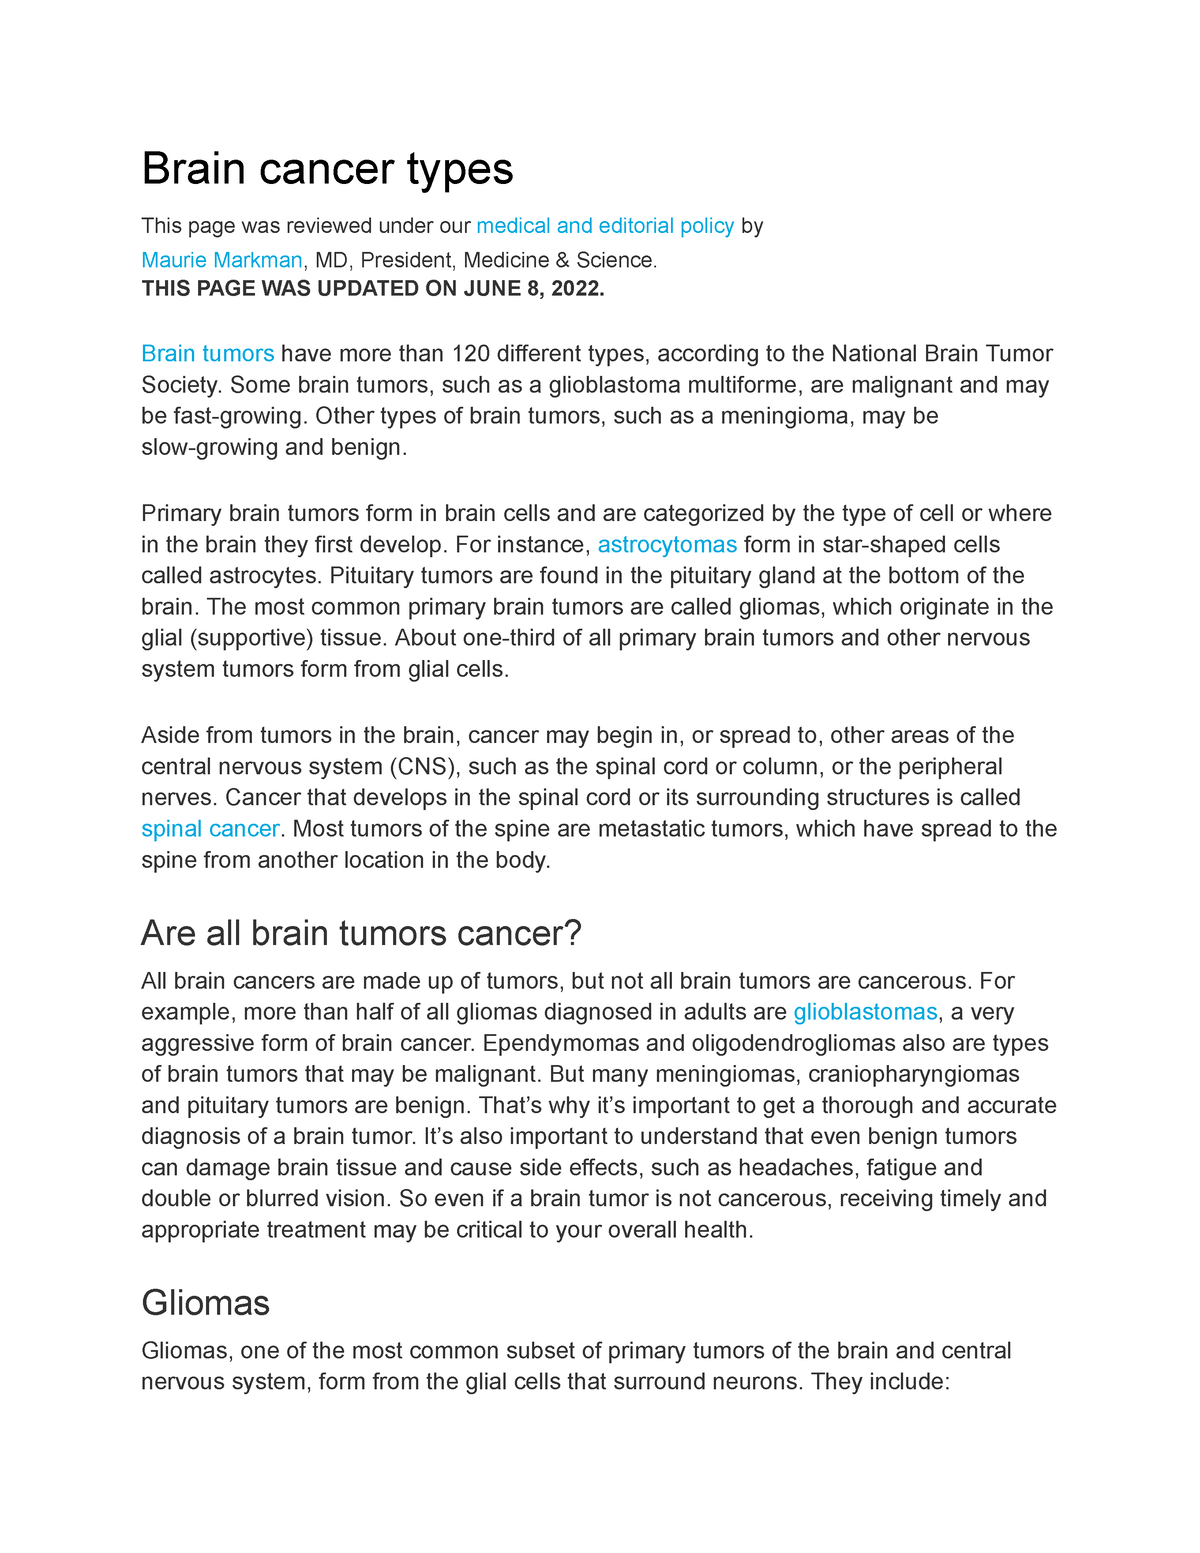 essays about brain cancer